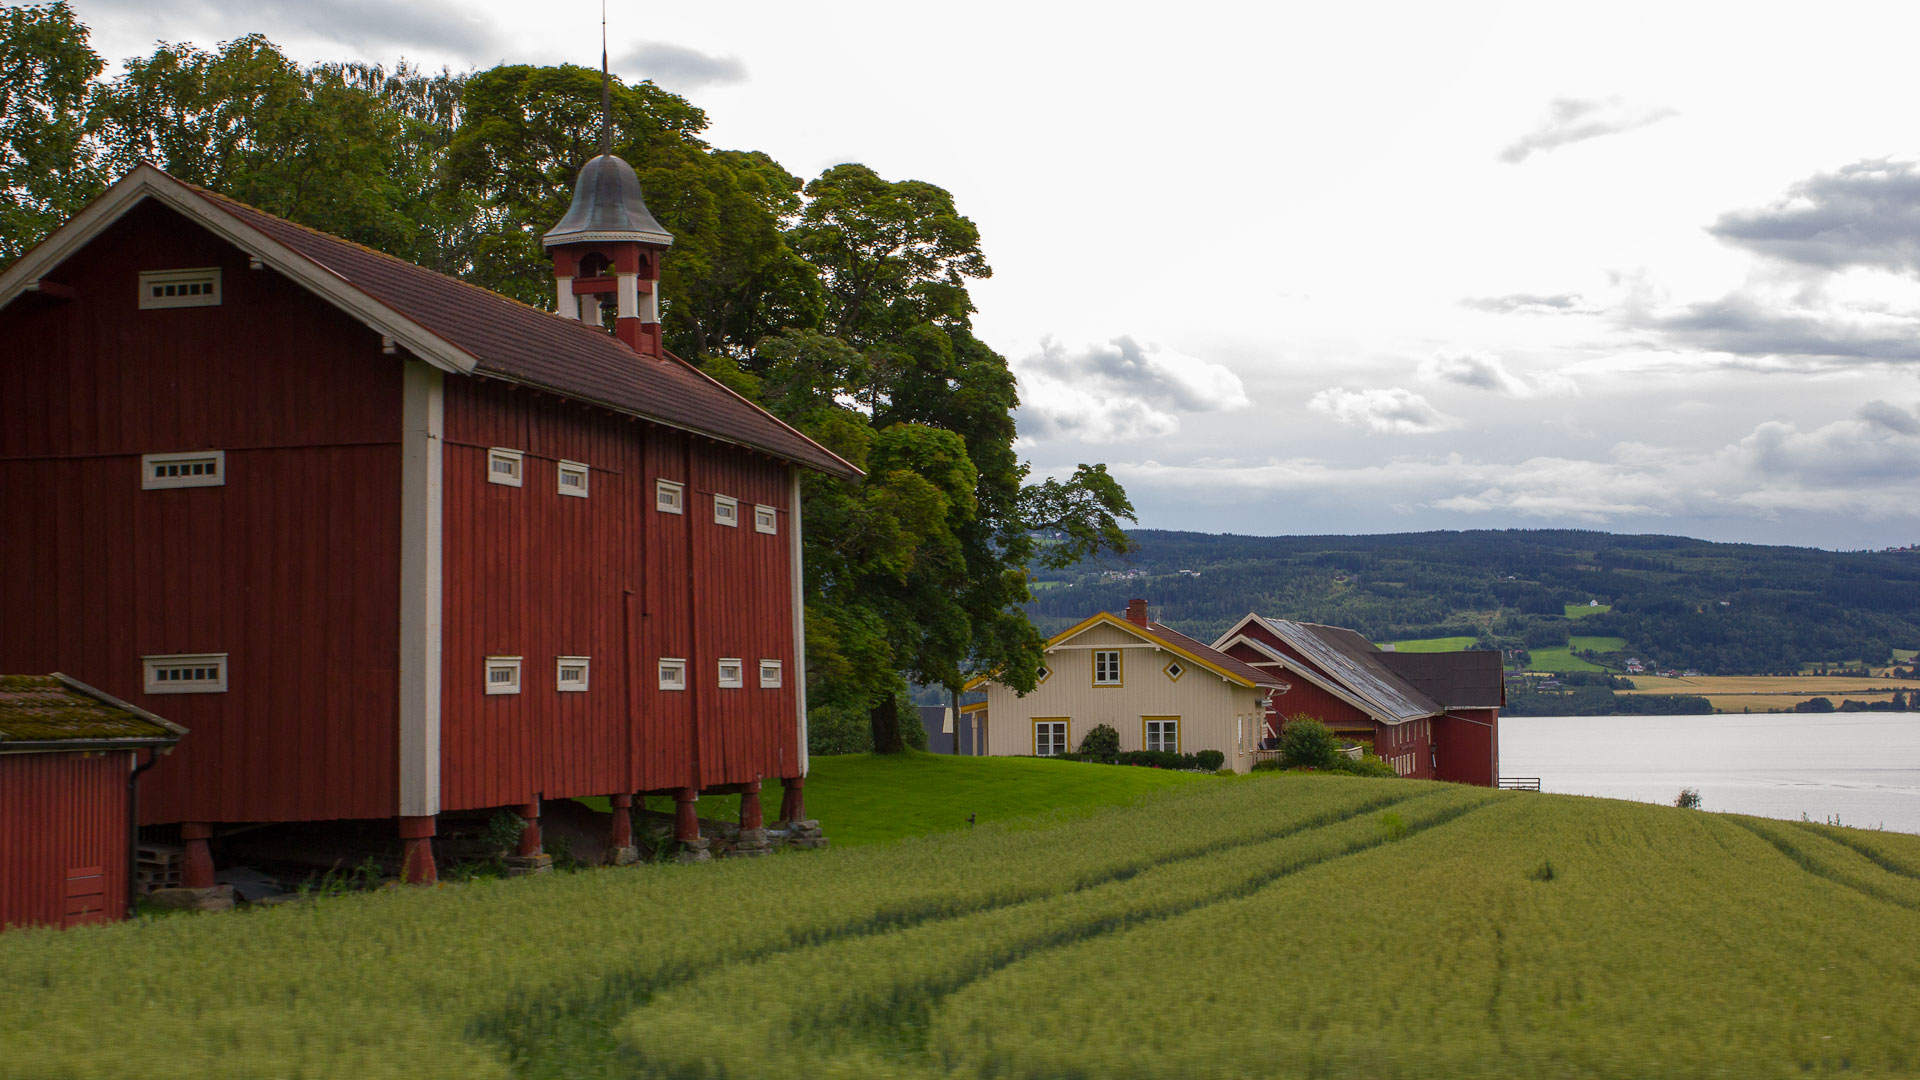 A farm in Norway